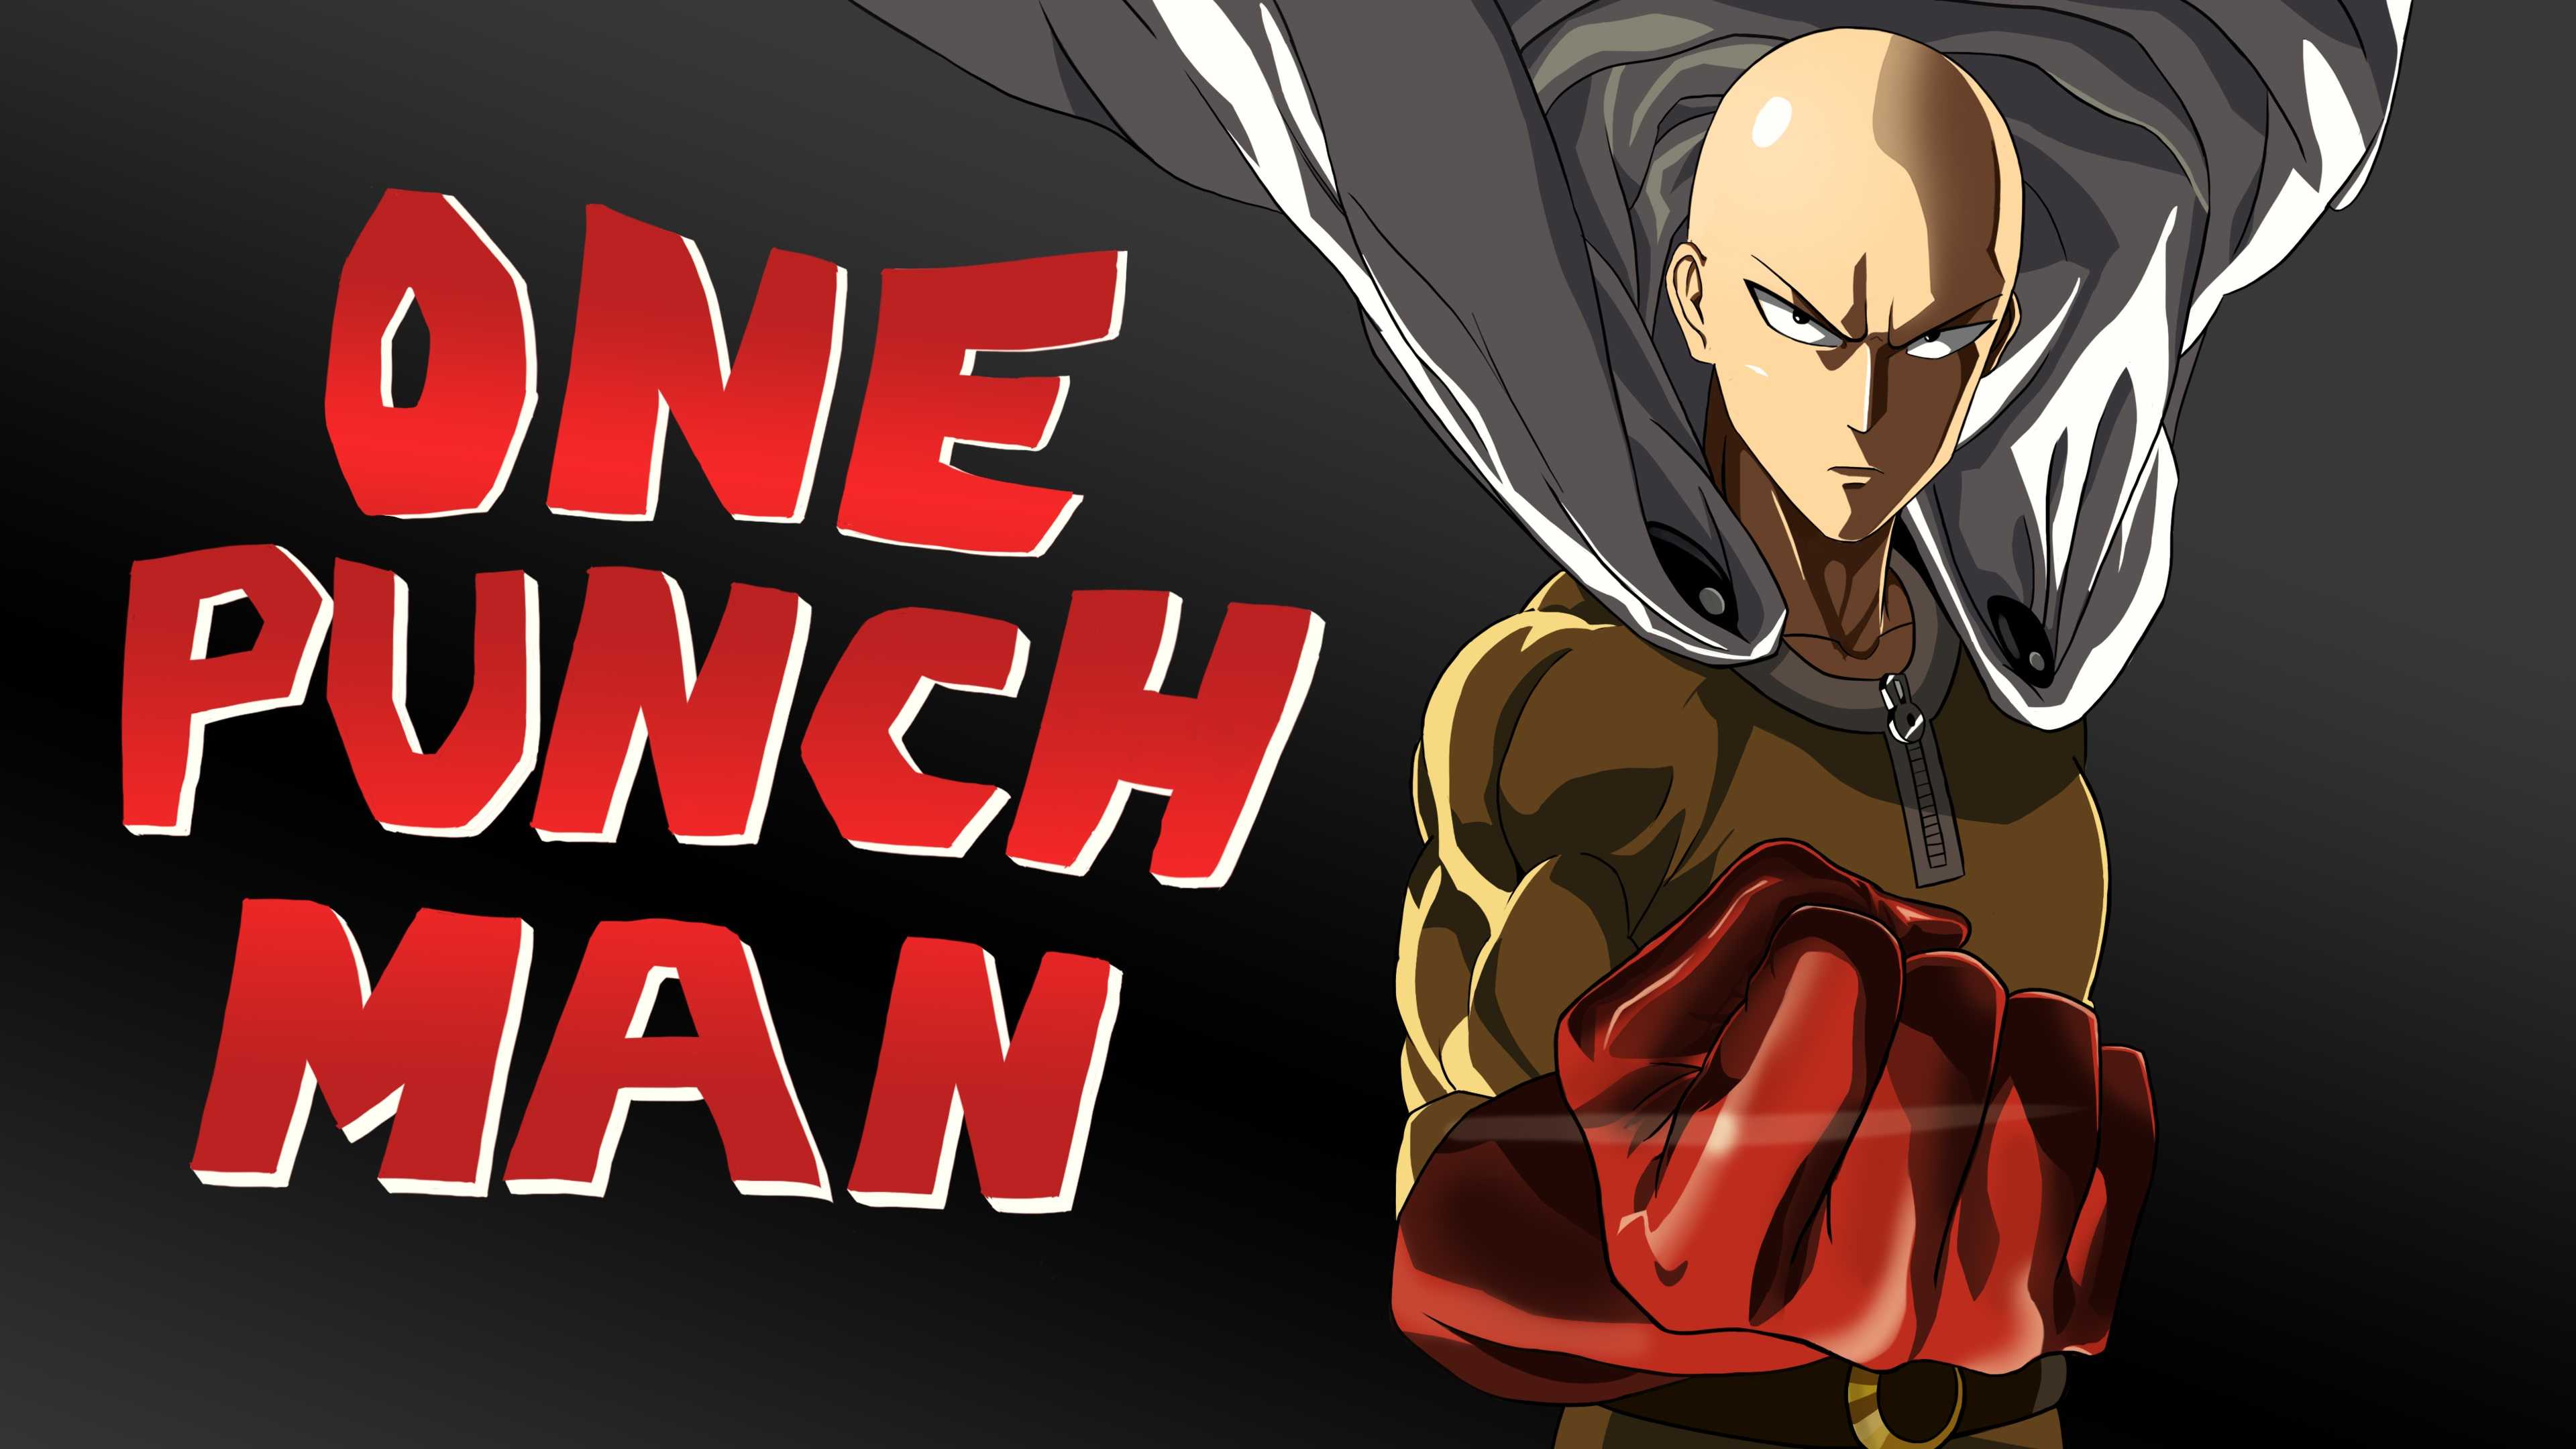 Saitama One Punch Man 4k 2020 Wallpaper,HD Anime Wallpapers,4k